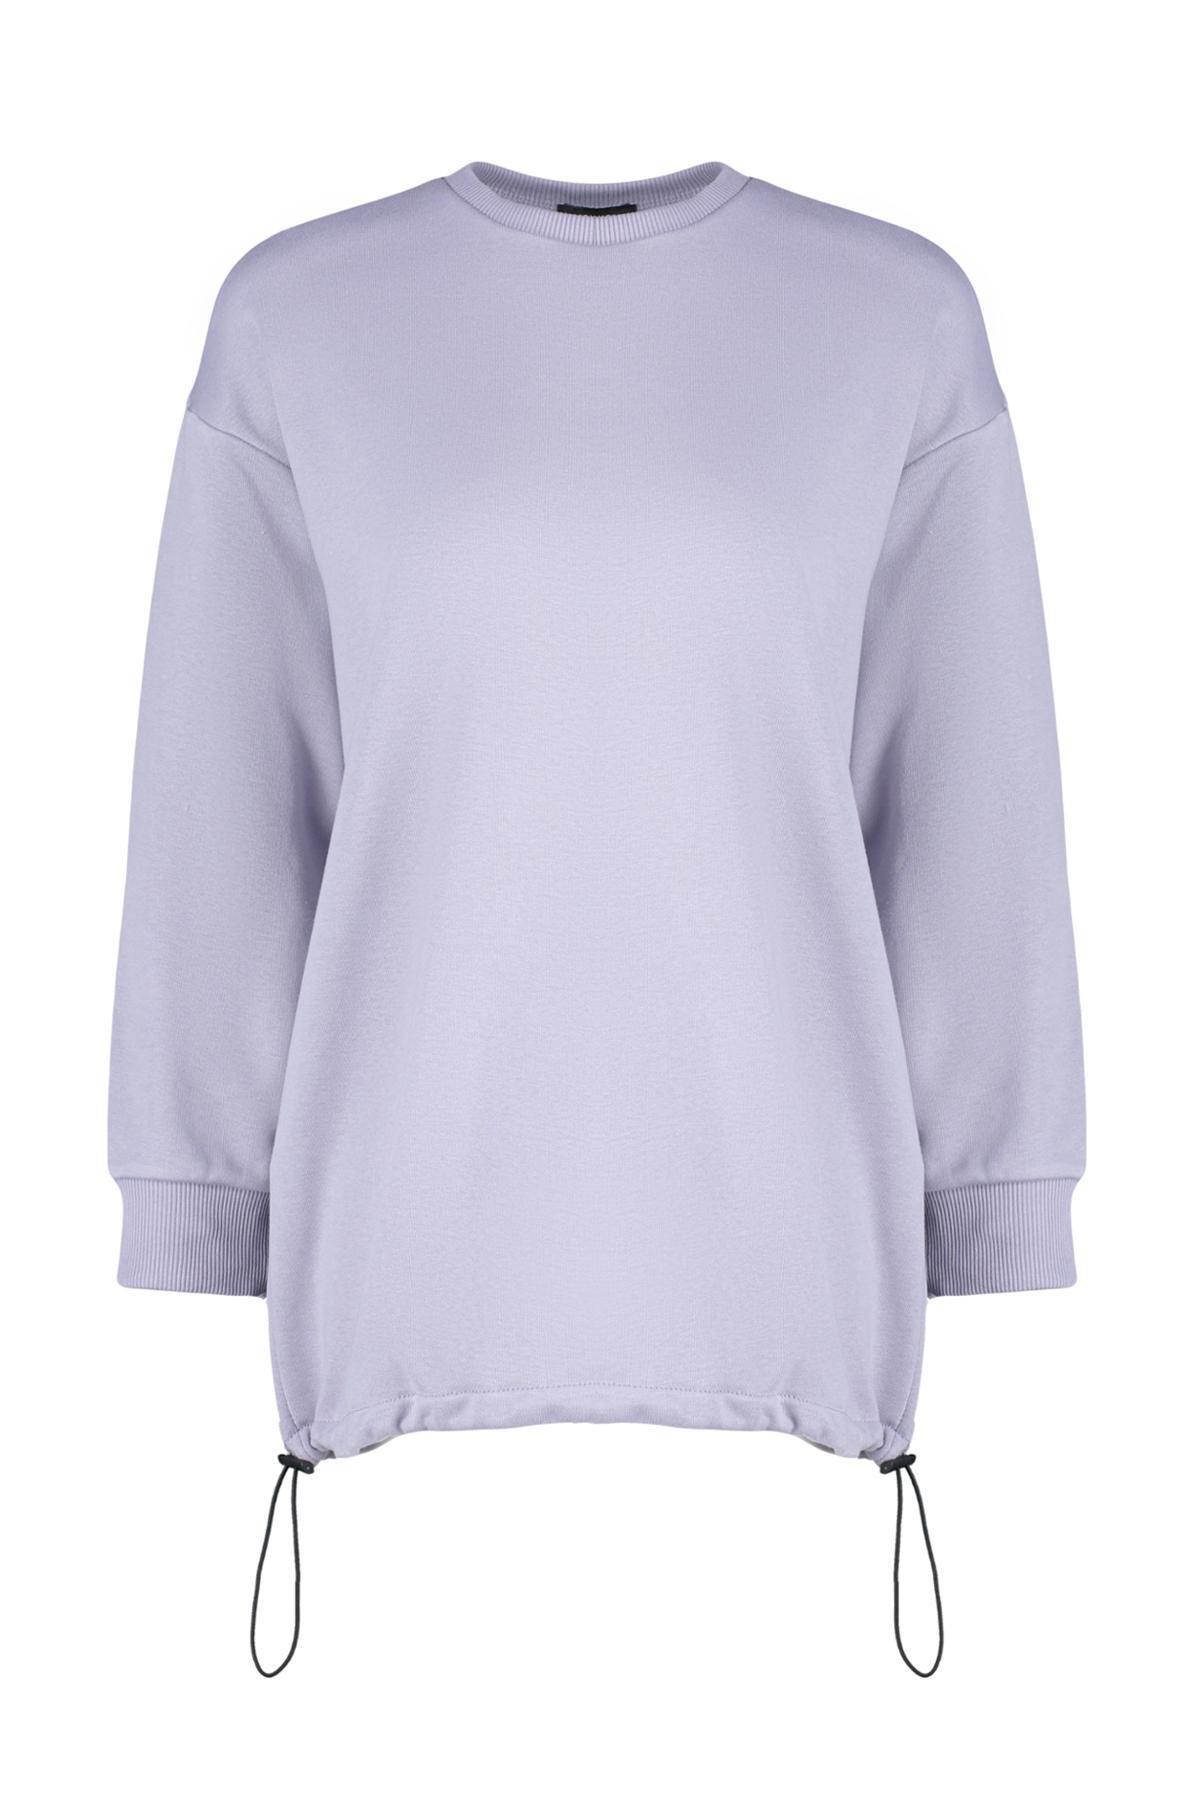 Trendyol - Purple Elastic Waistband Knitted Sweatshirt